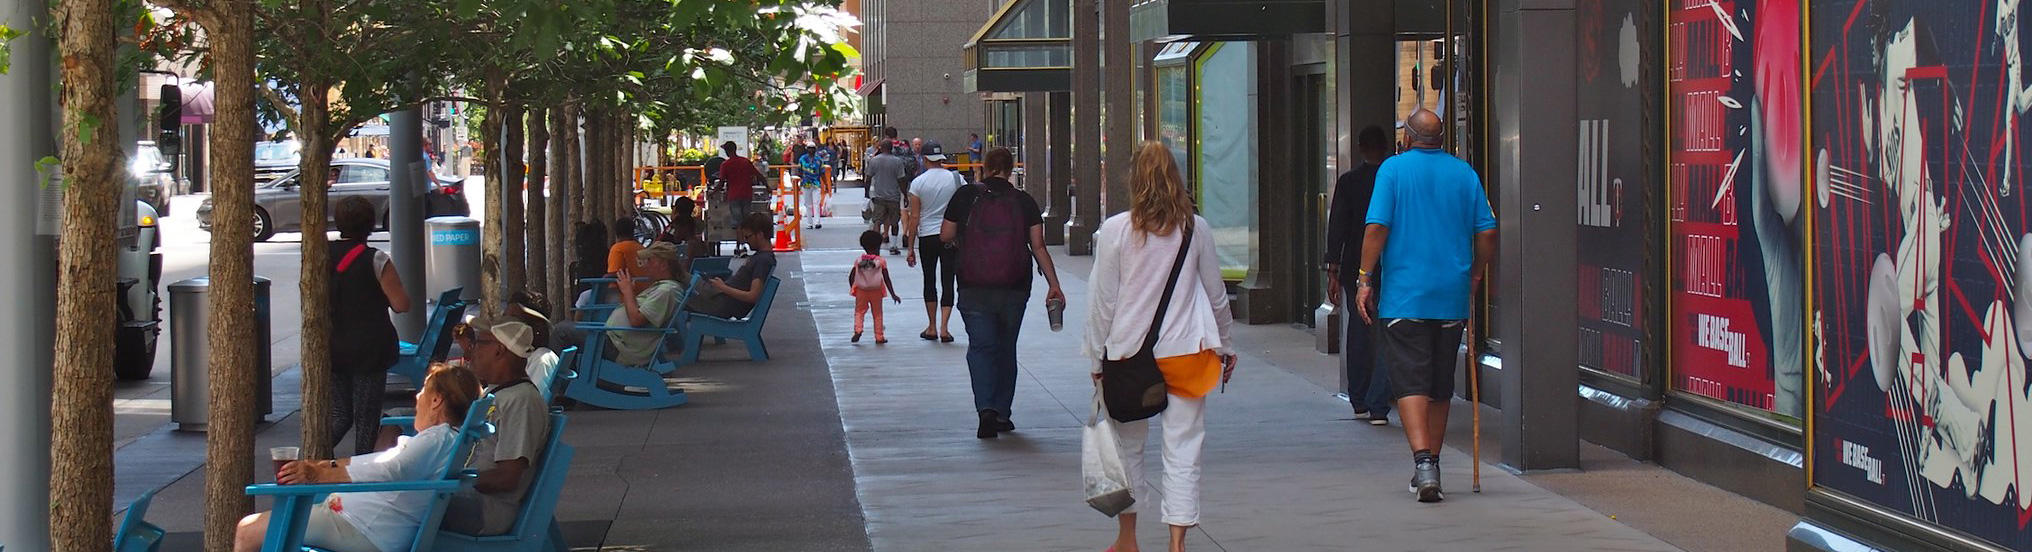 Pedestrians on Minneapolis street